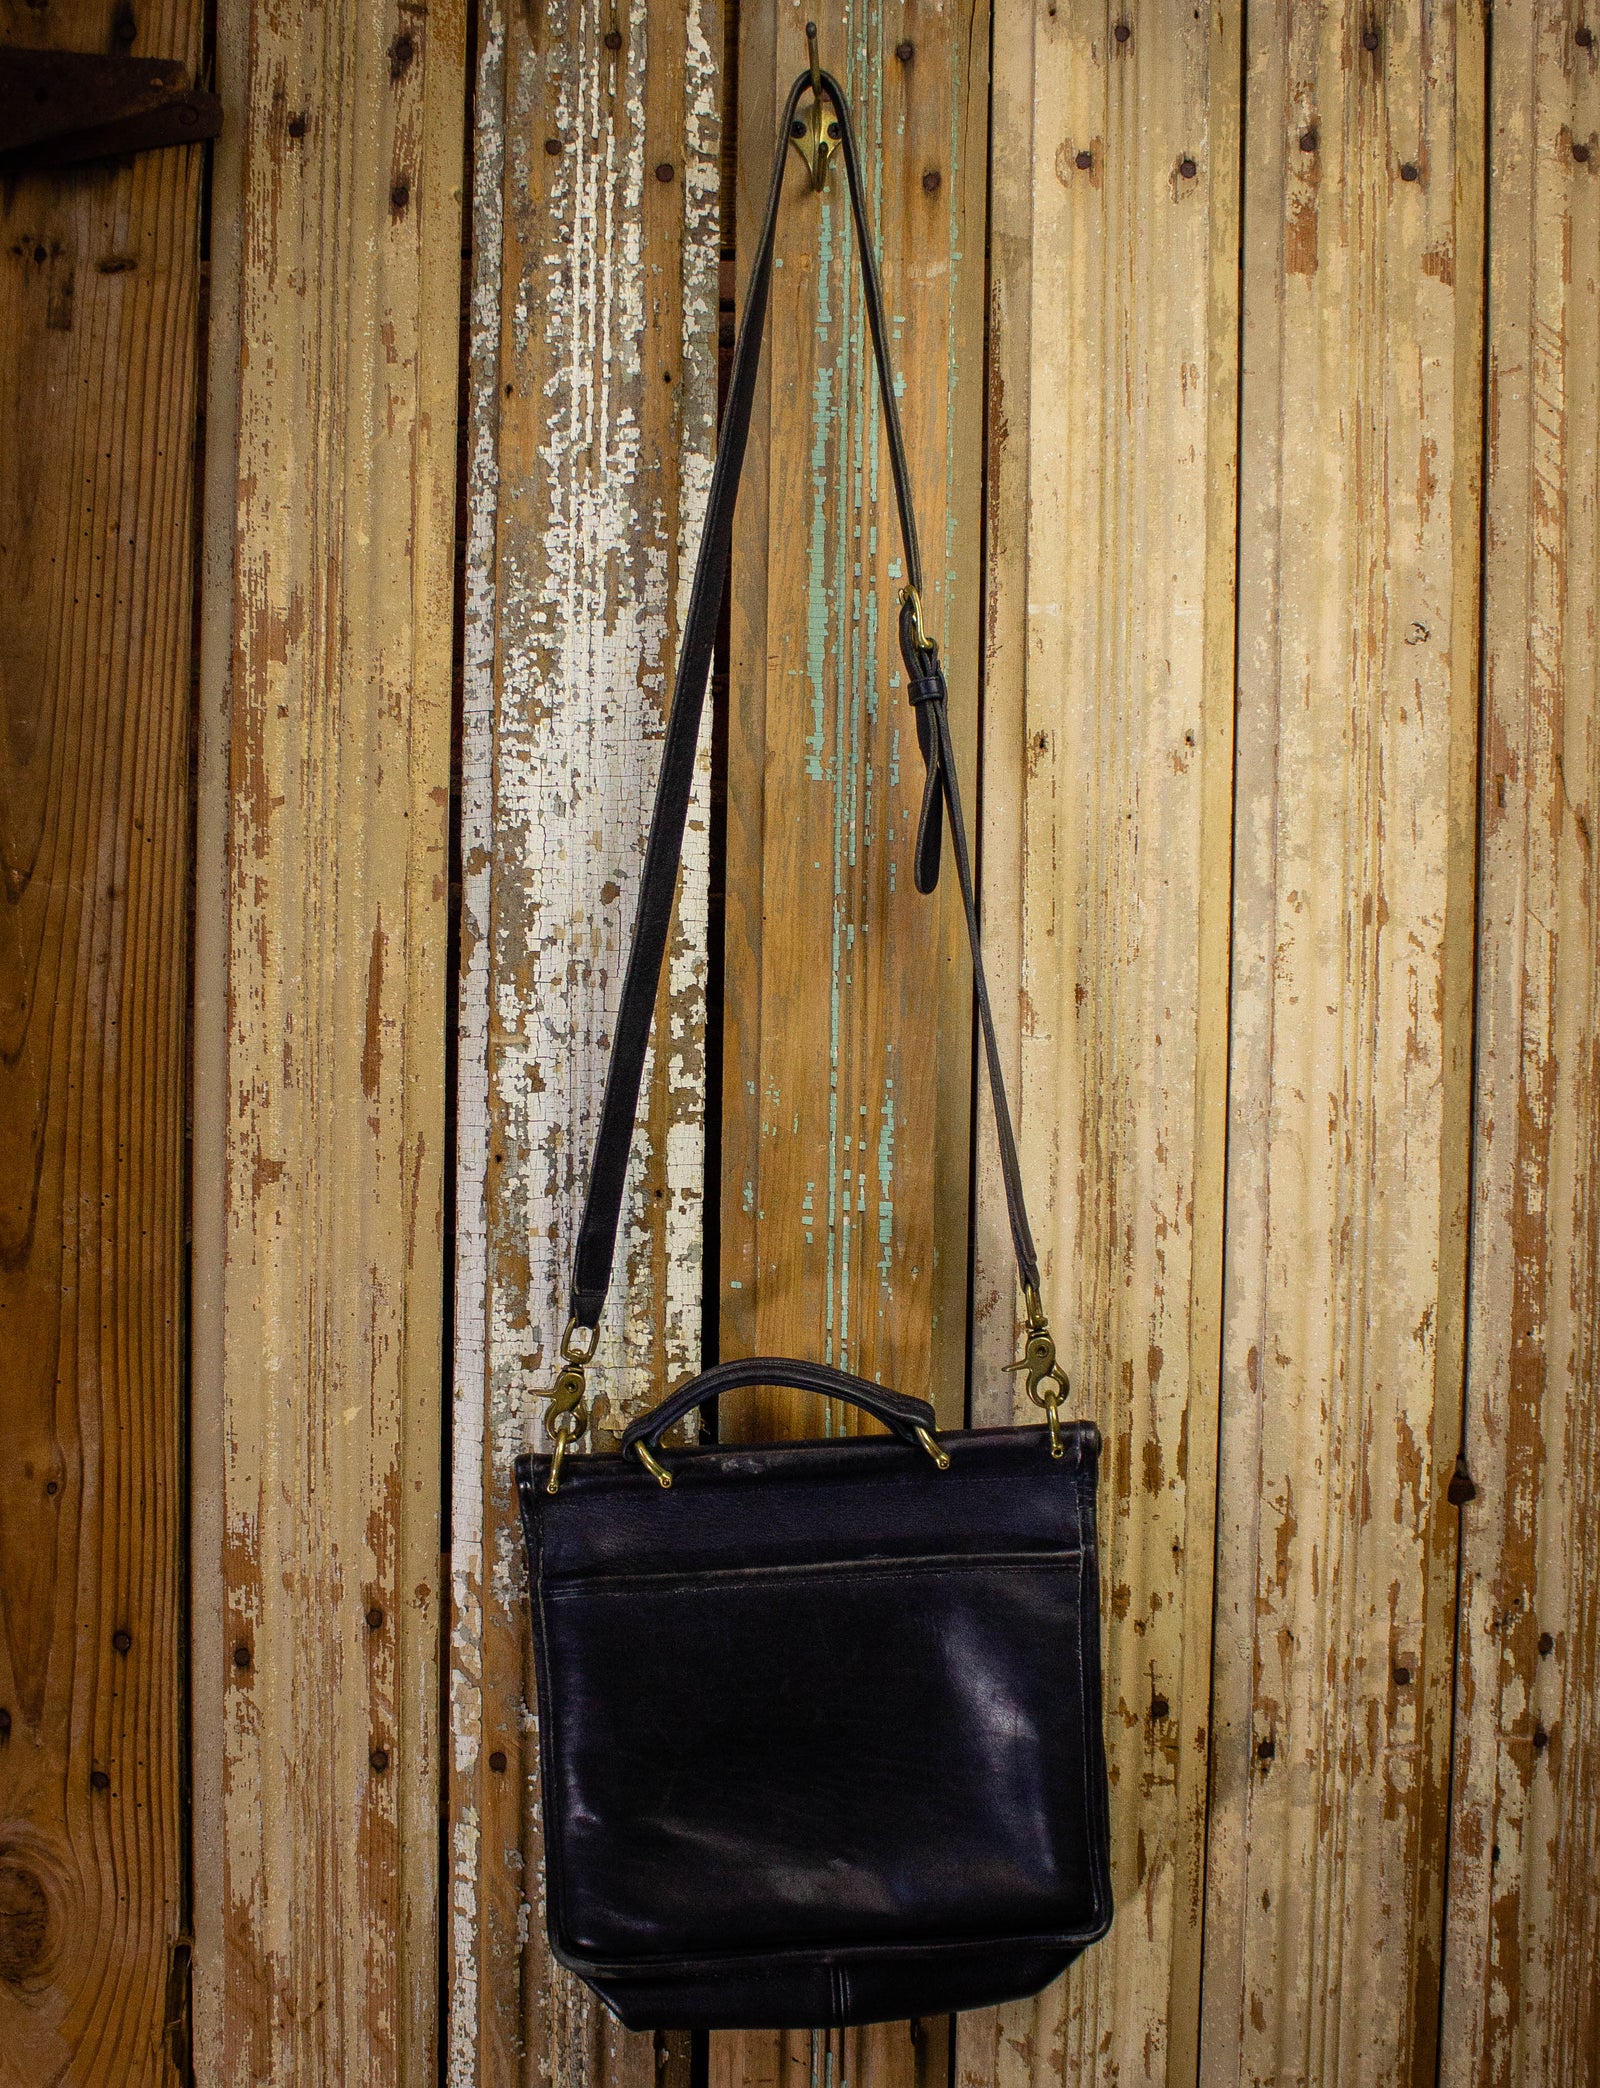 COACH: Designer Leather Bags & Handbags